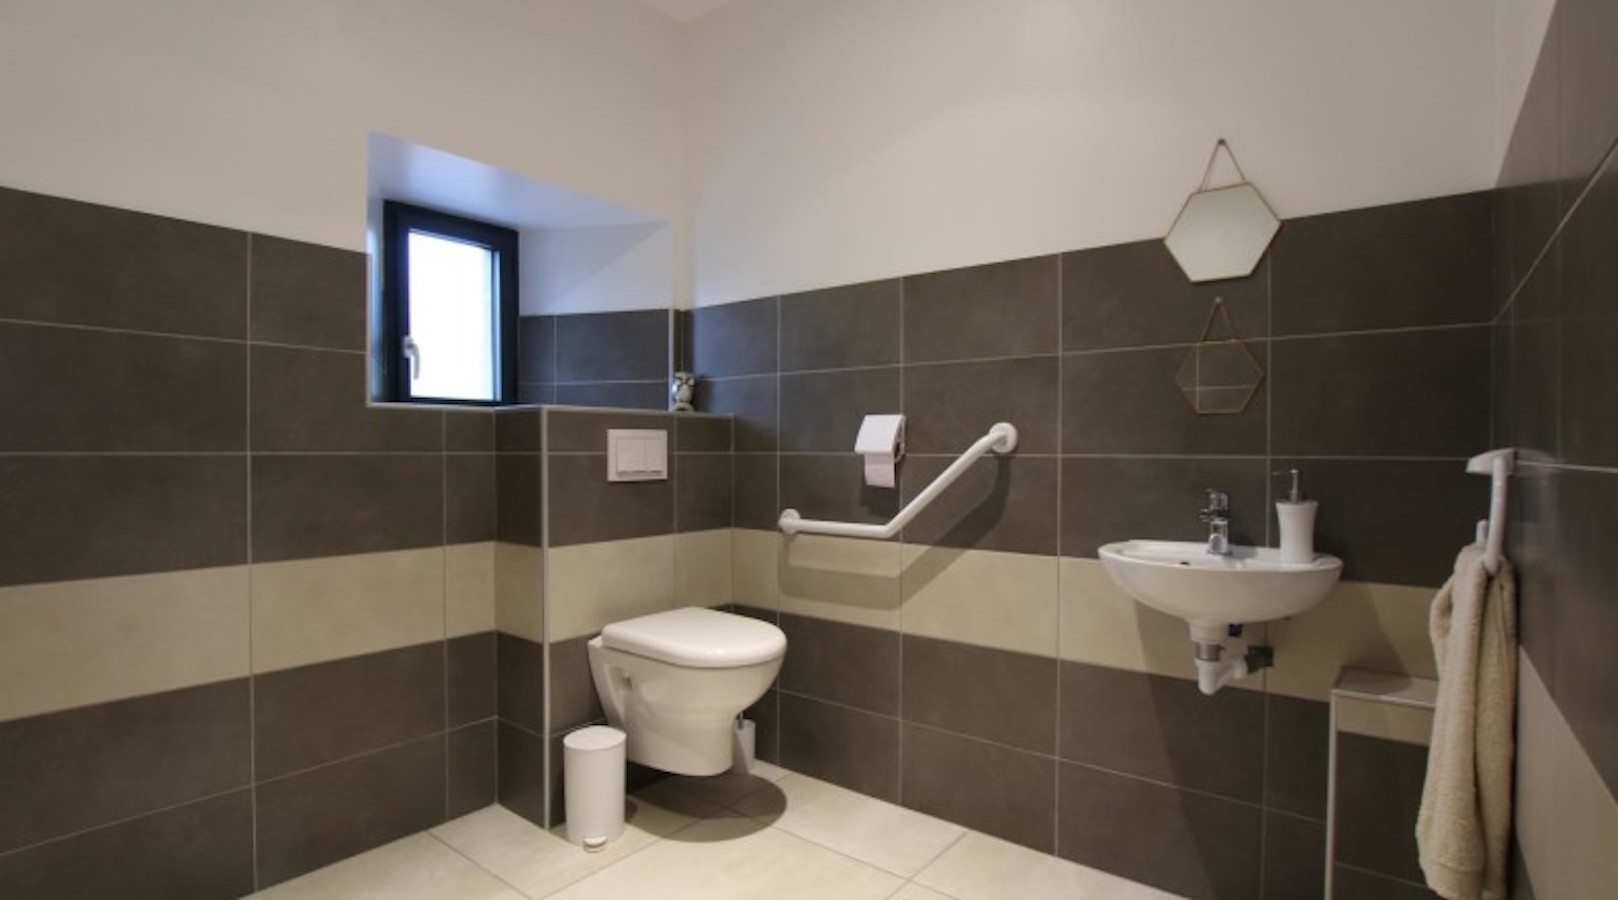 maison othart barrandeia toilettes adaptees juxue 